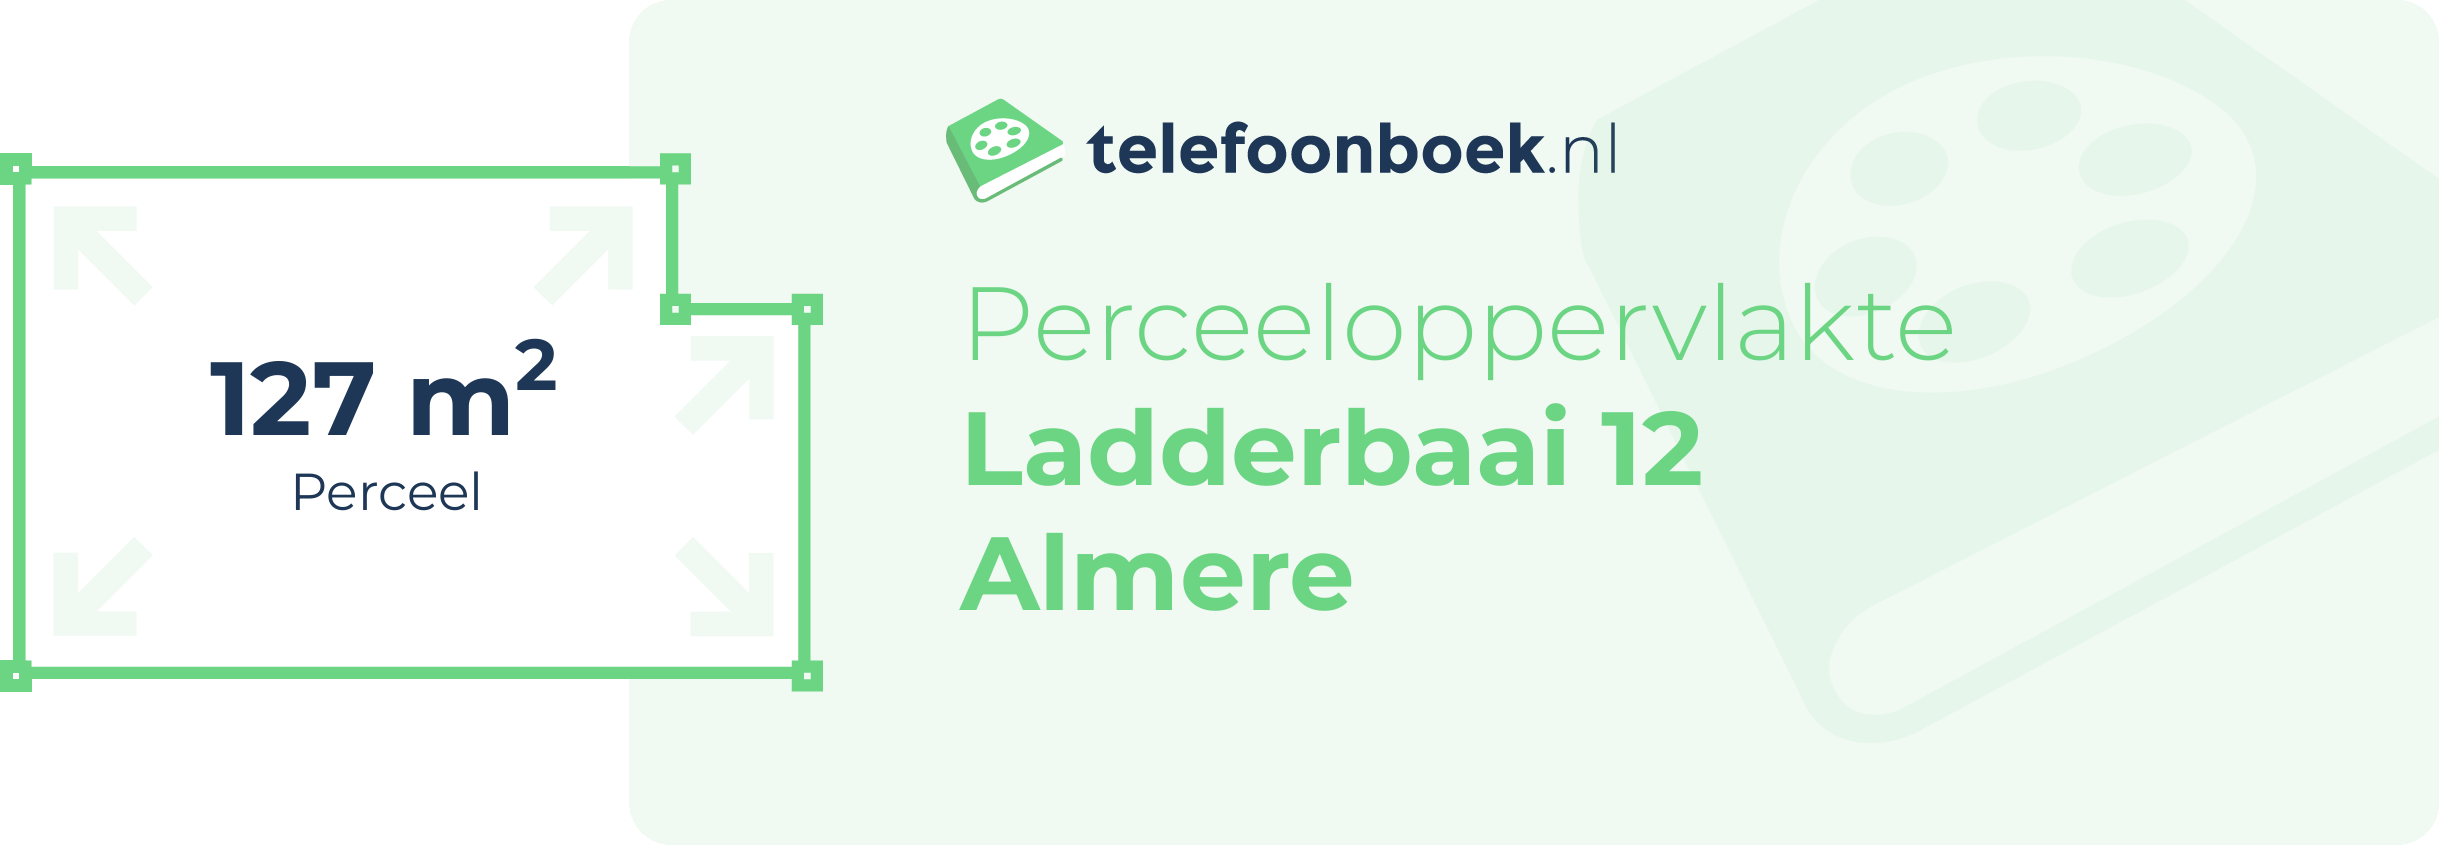 Perceeloppervlakte Ladderbaai 12 Almere